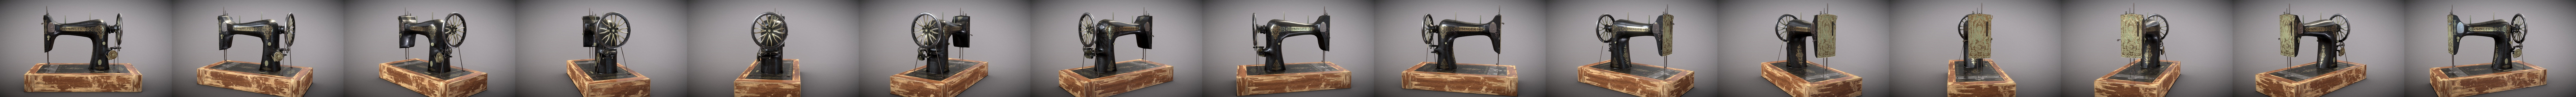 Vintage Singer Sewing Machine 3D Model Kit, Paper Cut Craft, Christmas Gift  